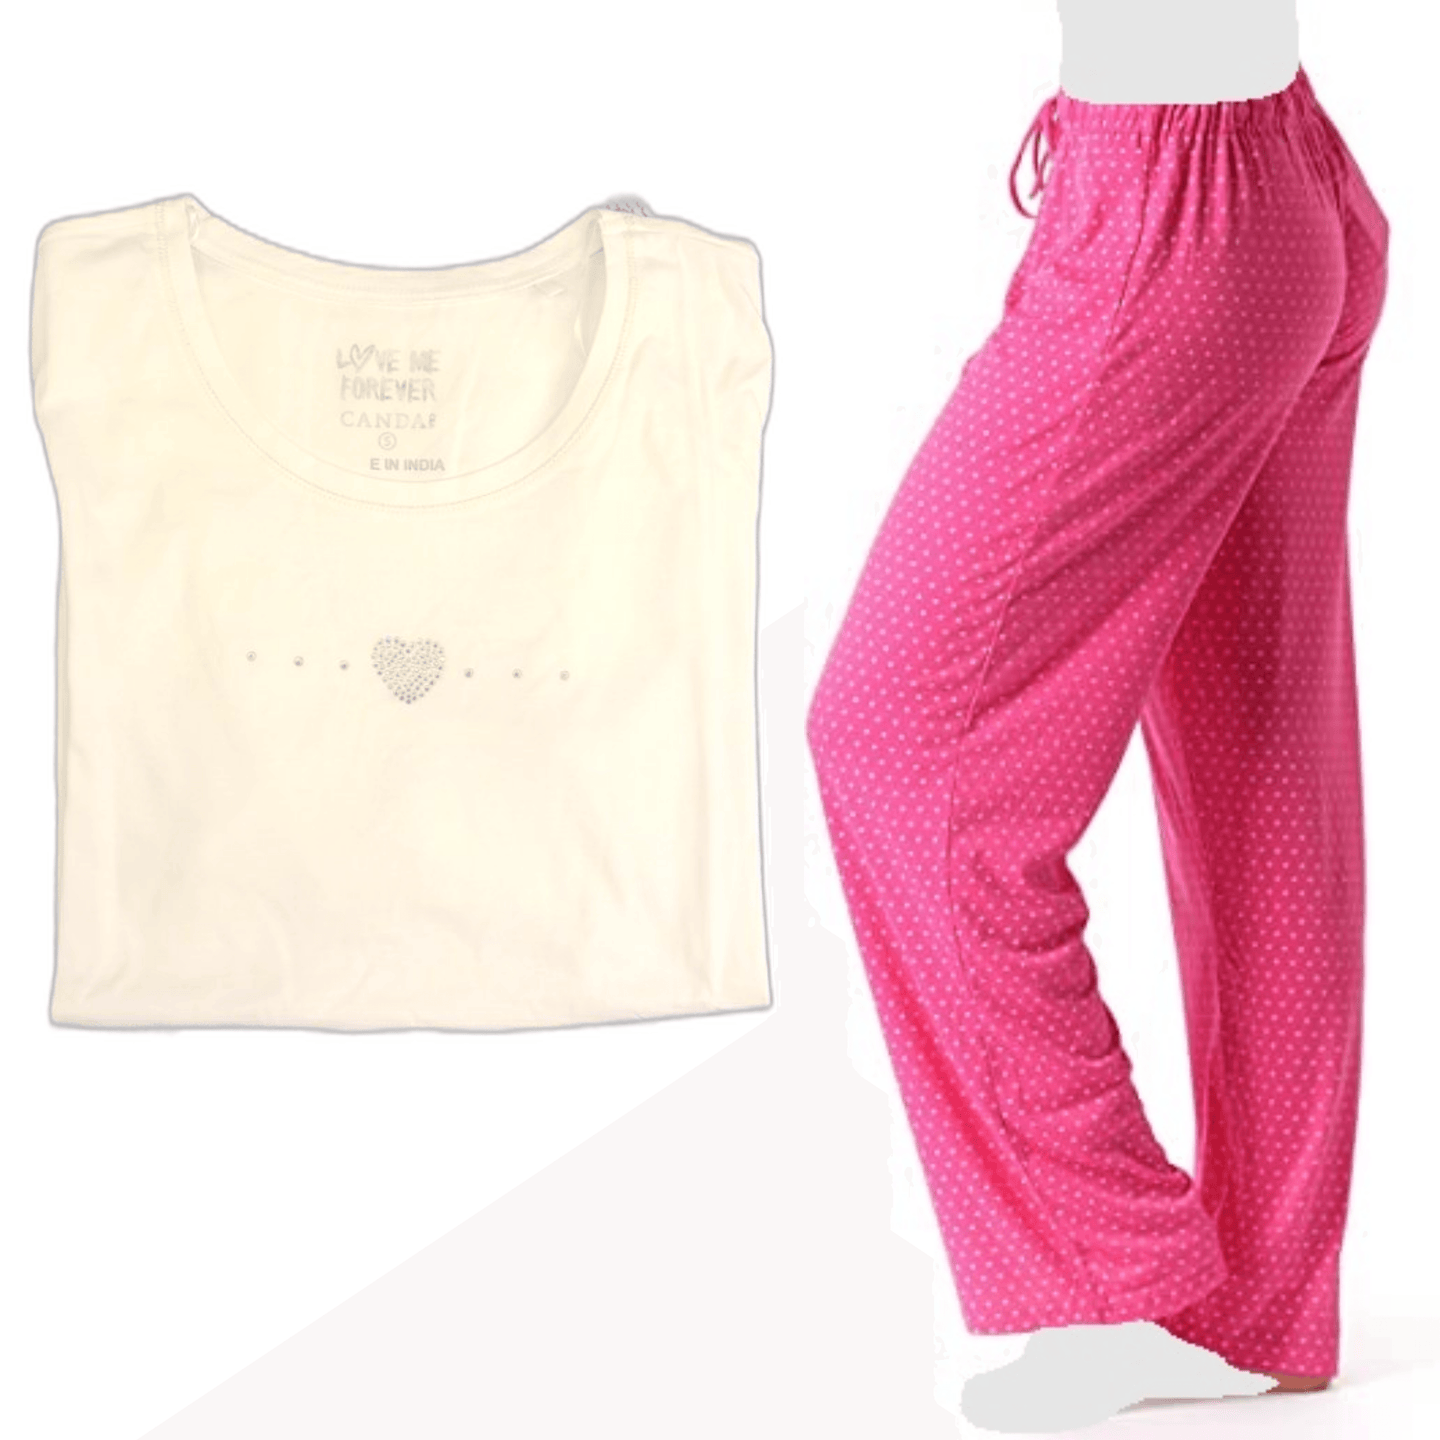 Women's Cozy Pajama Set Hot Pink Polka Dot Pants and Cotton Soft Heart T shirt by Just Love - PremiumBrandGoods